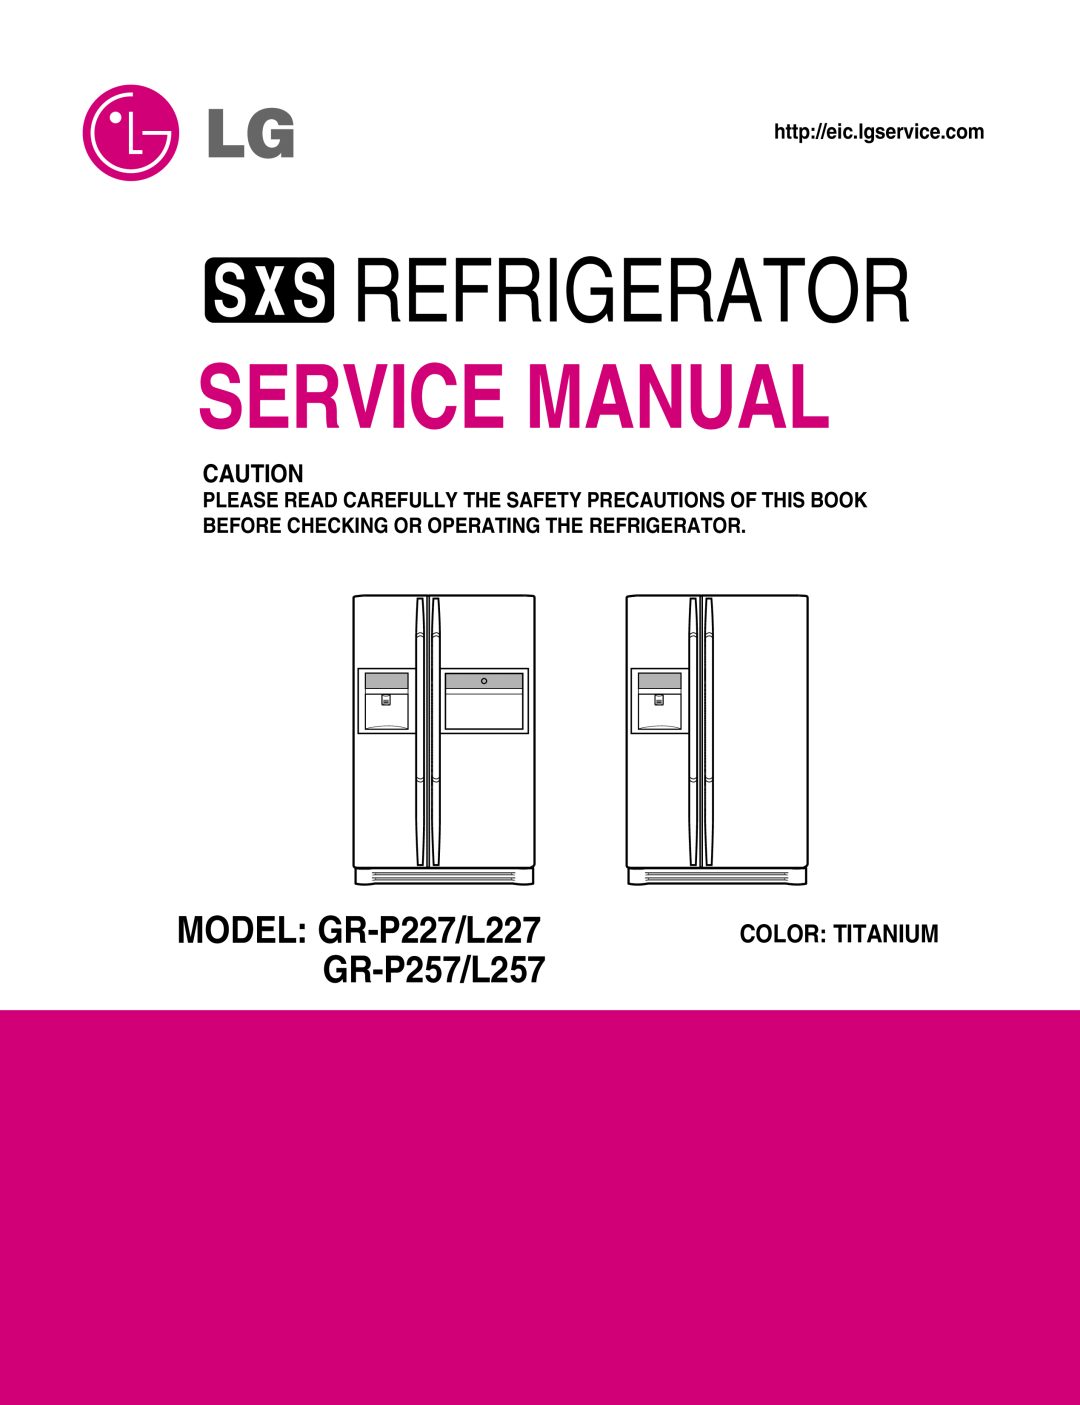 LG Electronics GR-P257/L257 service manual http//eic.lgservice.com, Refrigerator, Service Manual, Color Titanium 